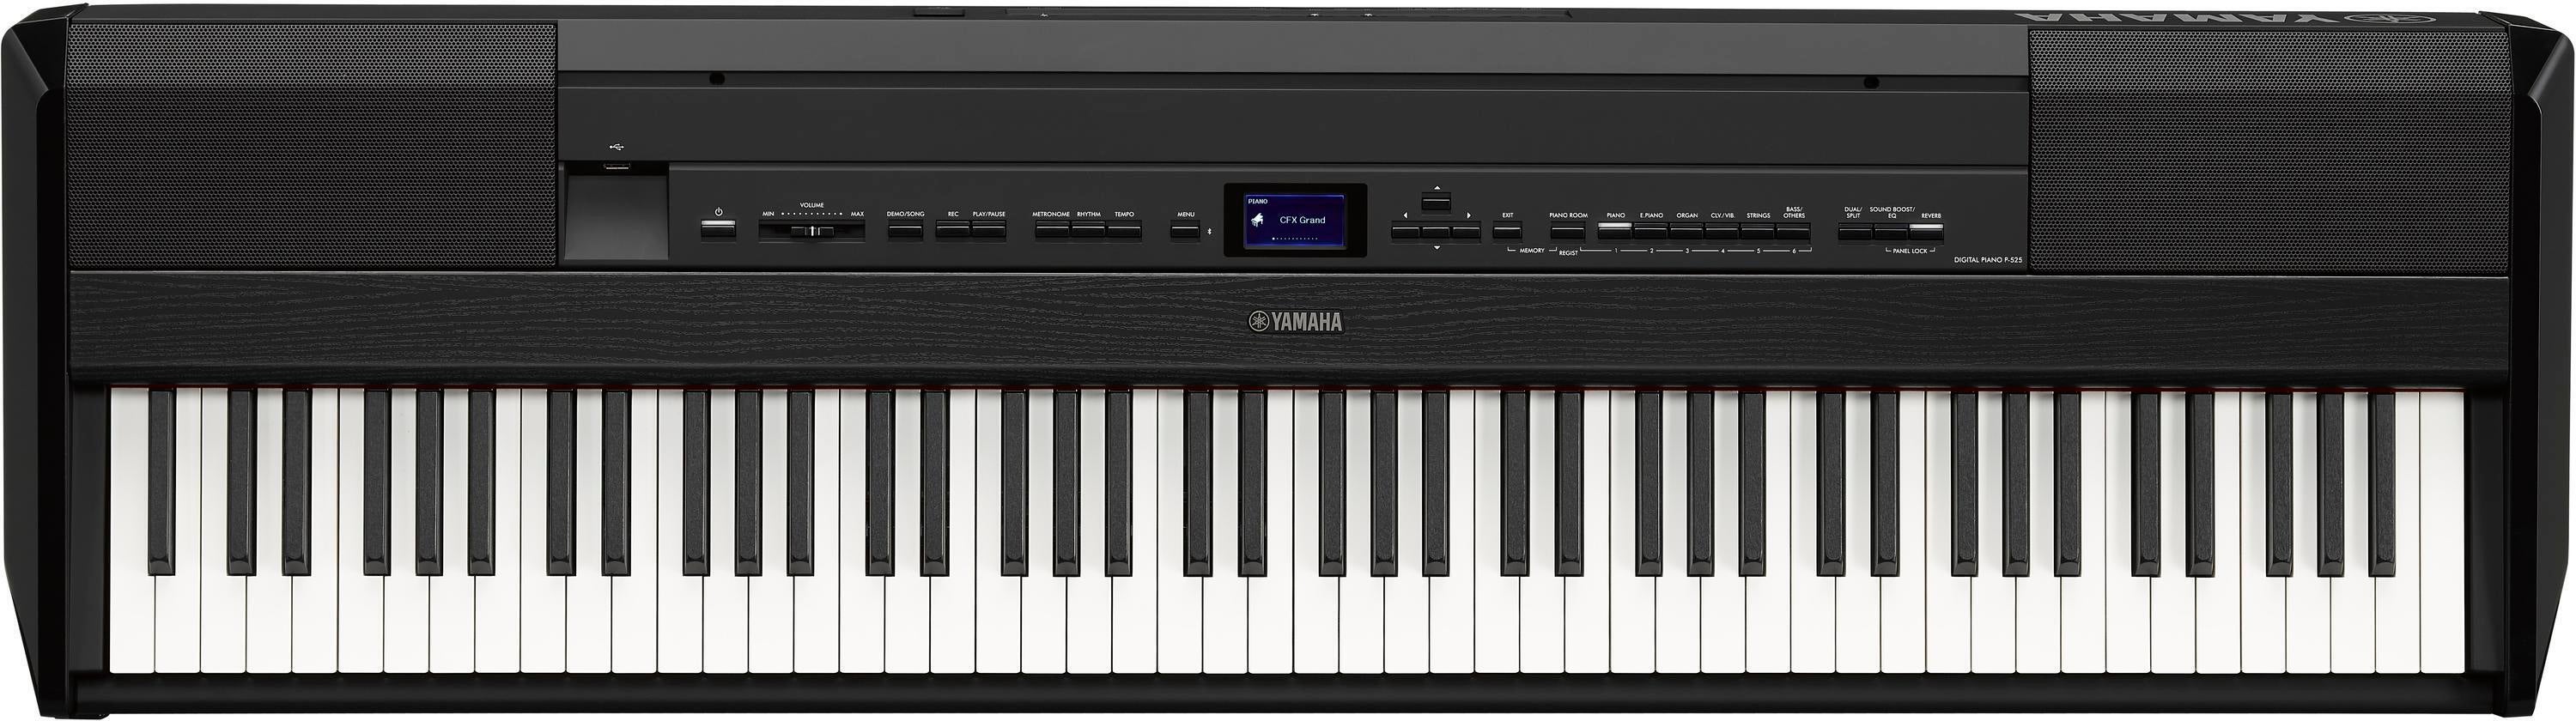 Bundled Item: Yamaha P-525 88-key Digital Piano with Speakers - Black